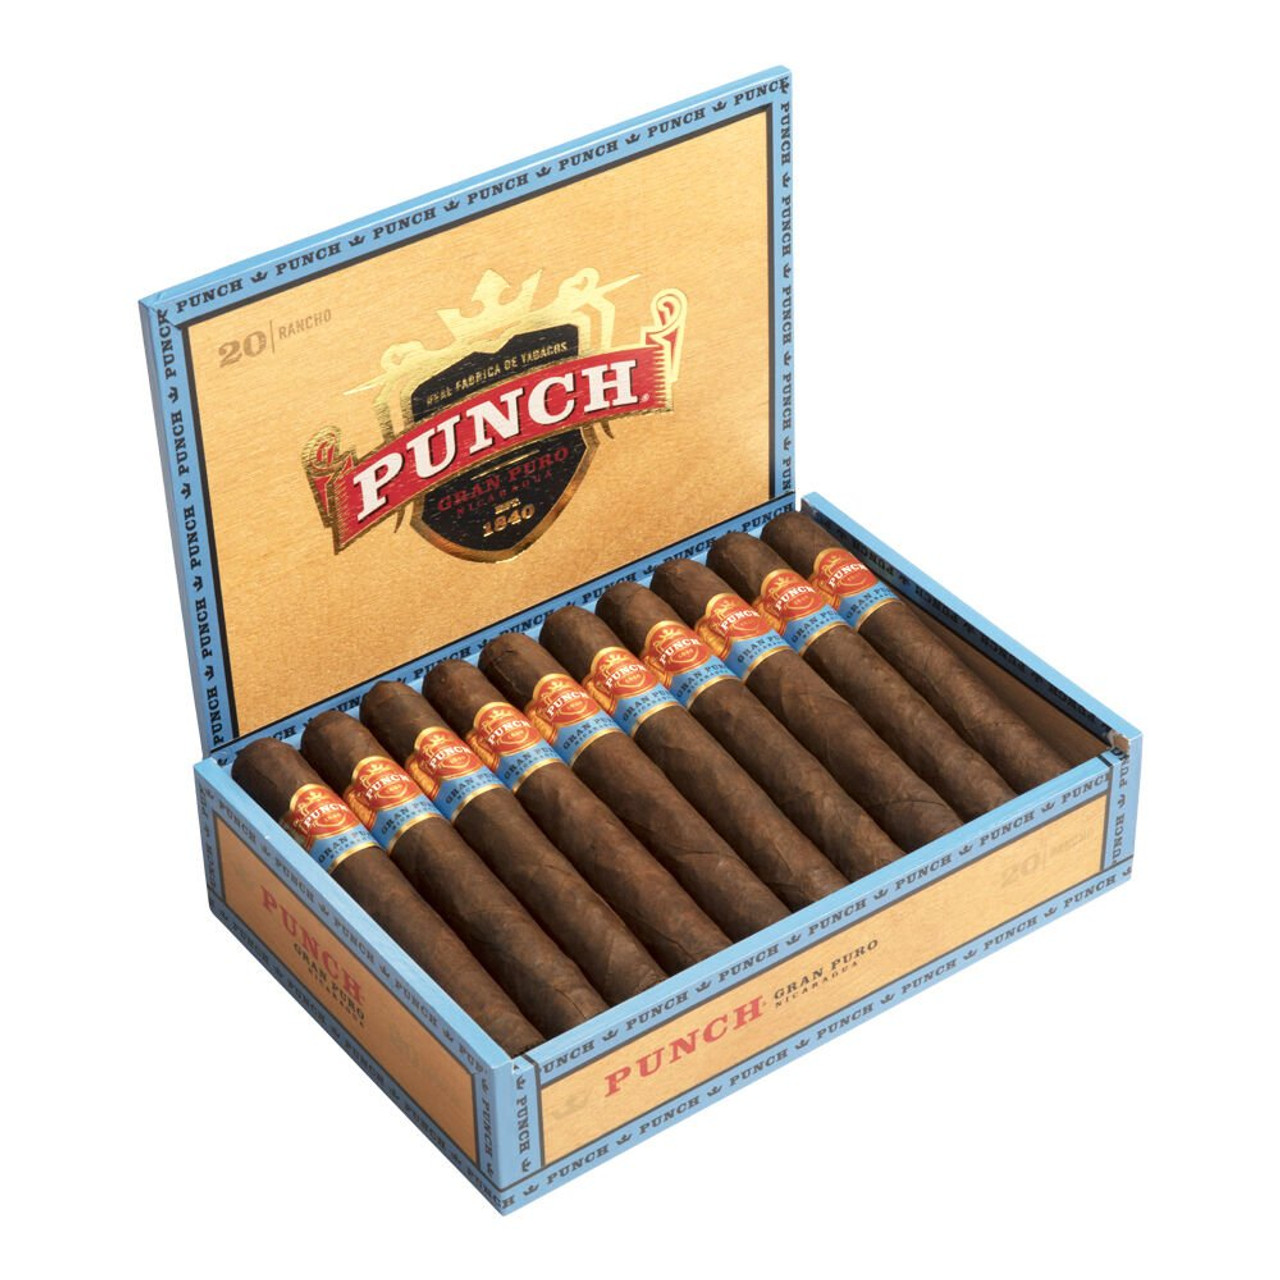 Punch Gran Puro Nicaragua Cigars - 6 x 54 (Box of 20) Open